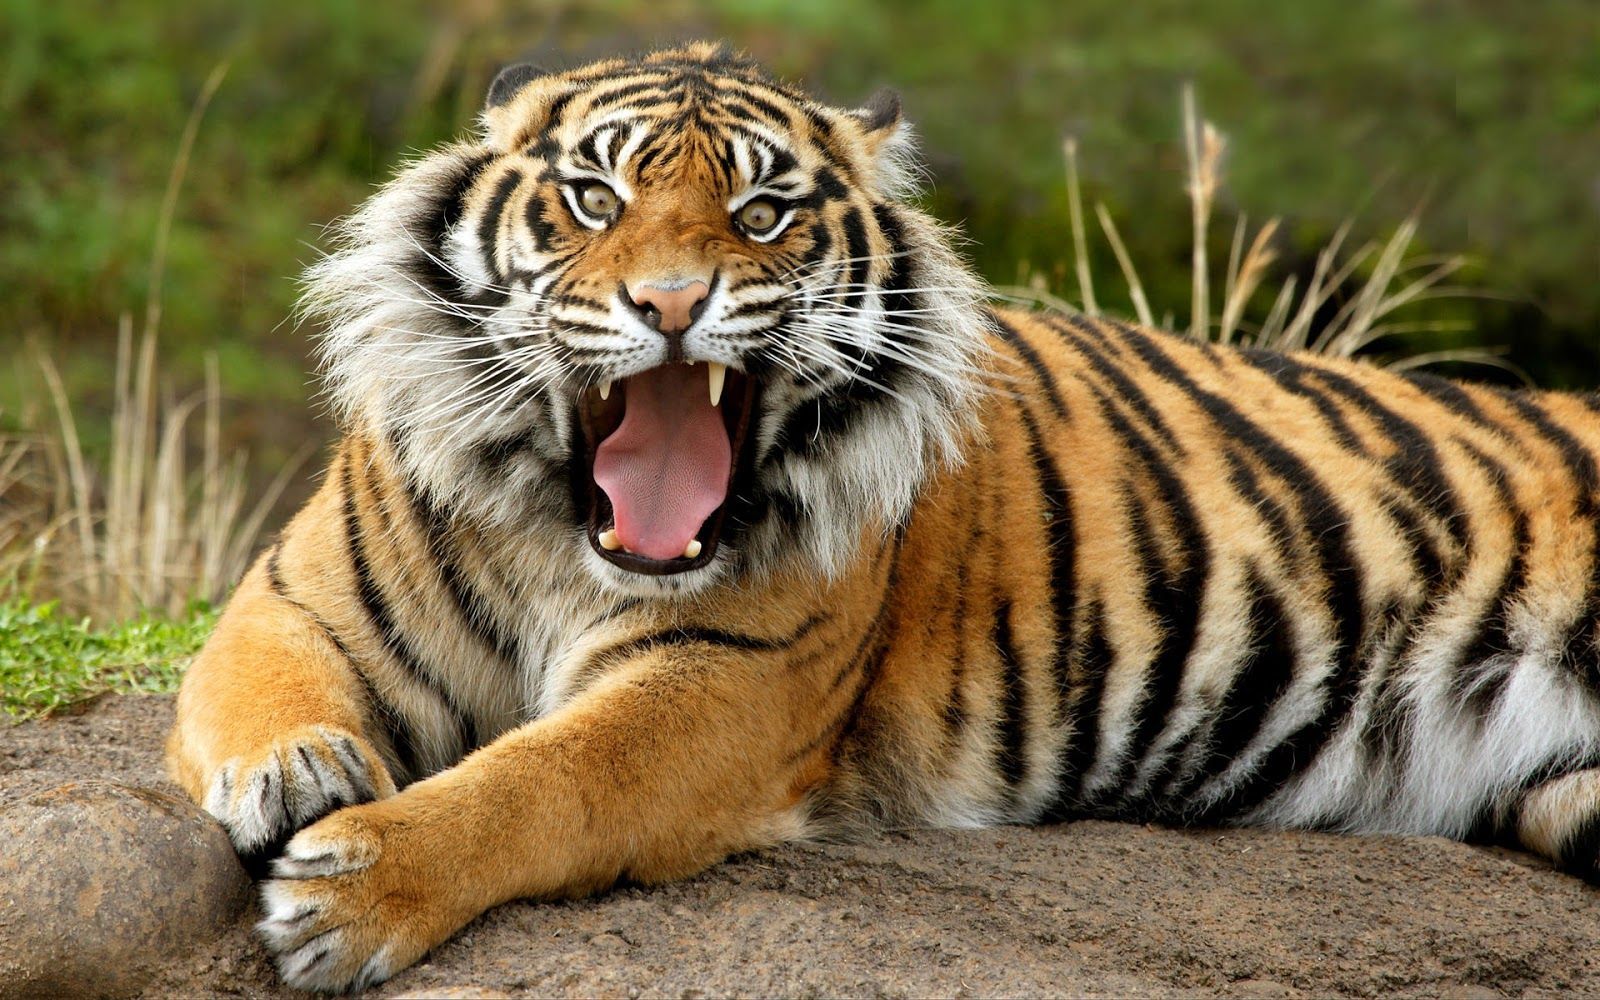 wildlife-of-the-world-tiger-desktop-wallpapers-hd-1386282547_org.jpg